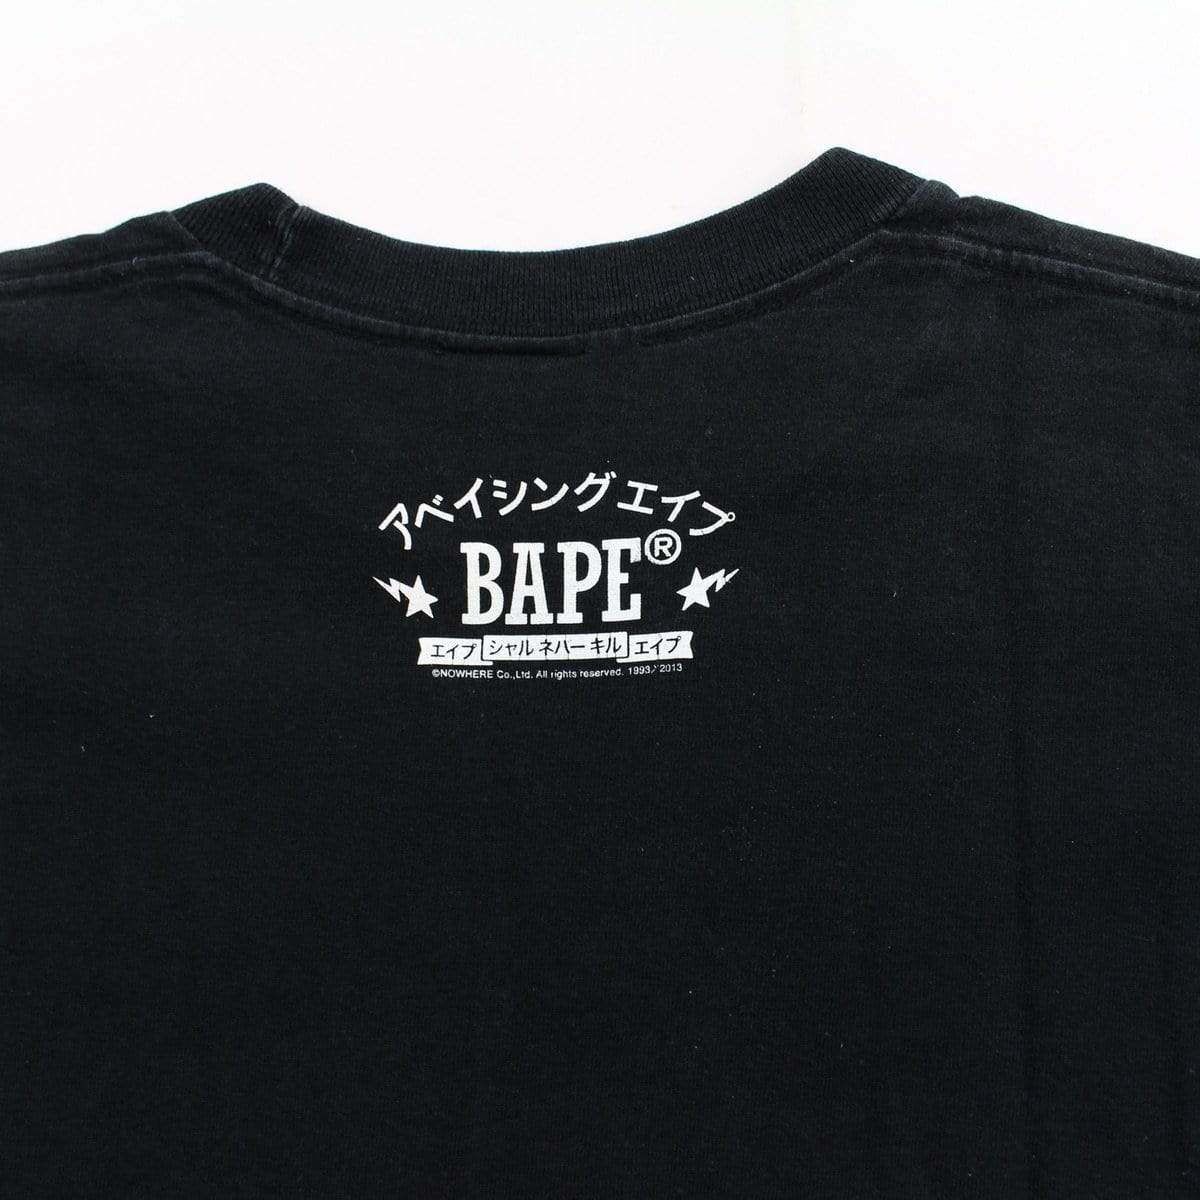 bape katakana pirate college logo tee black - SaruGeneral